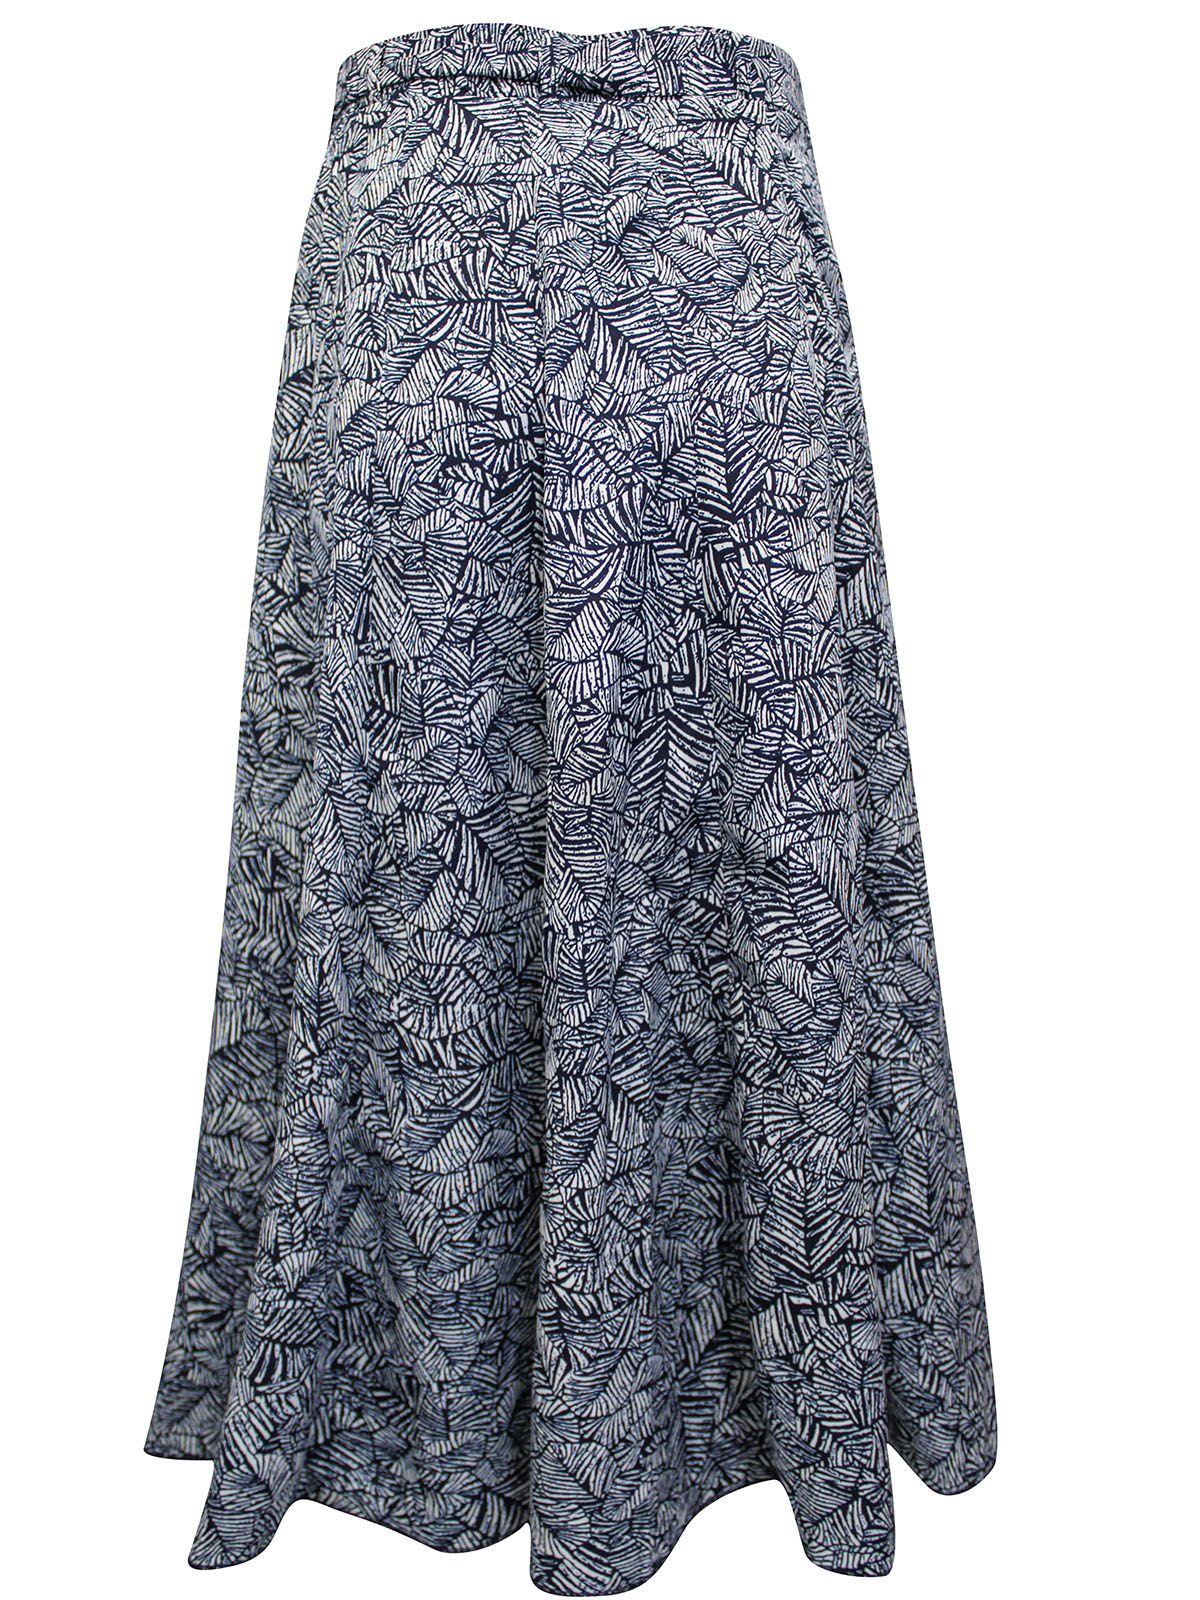 Damart - - Damart NAVY Printed A-Line Belted Skirt - Size 10 to 24